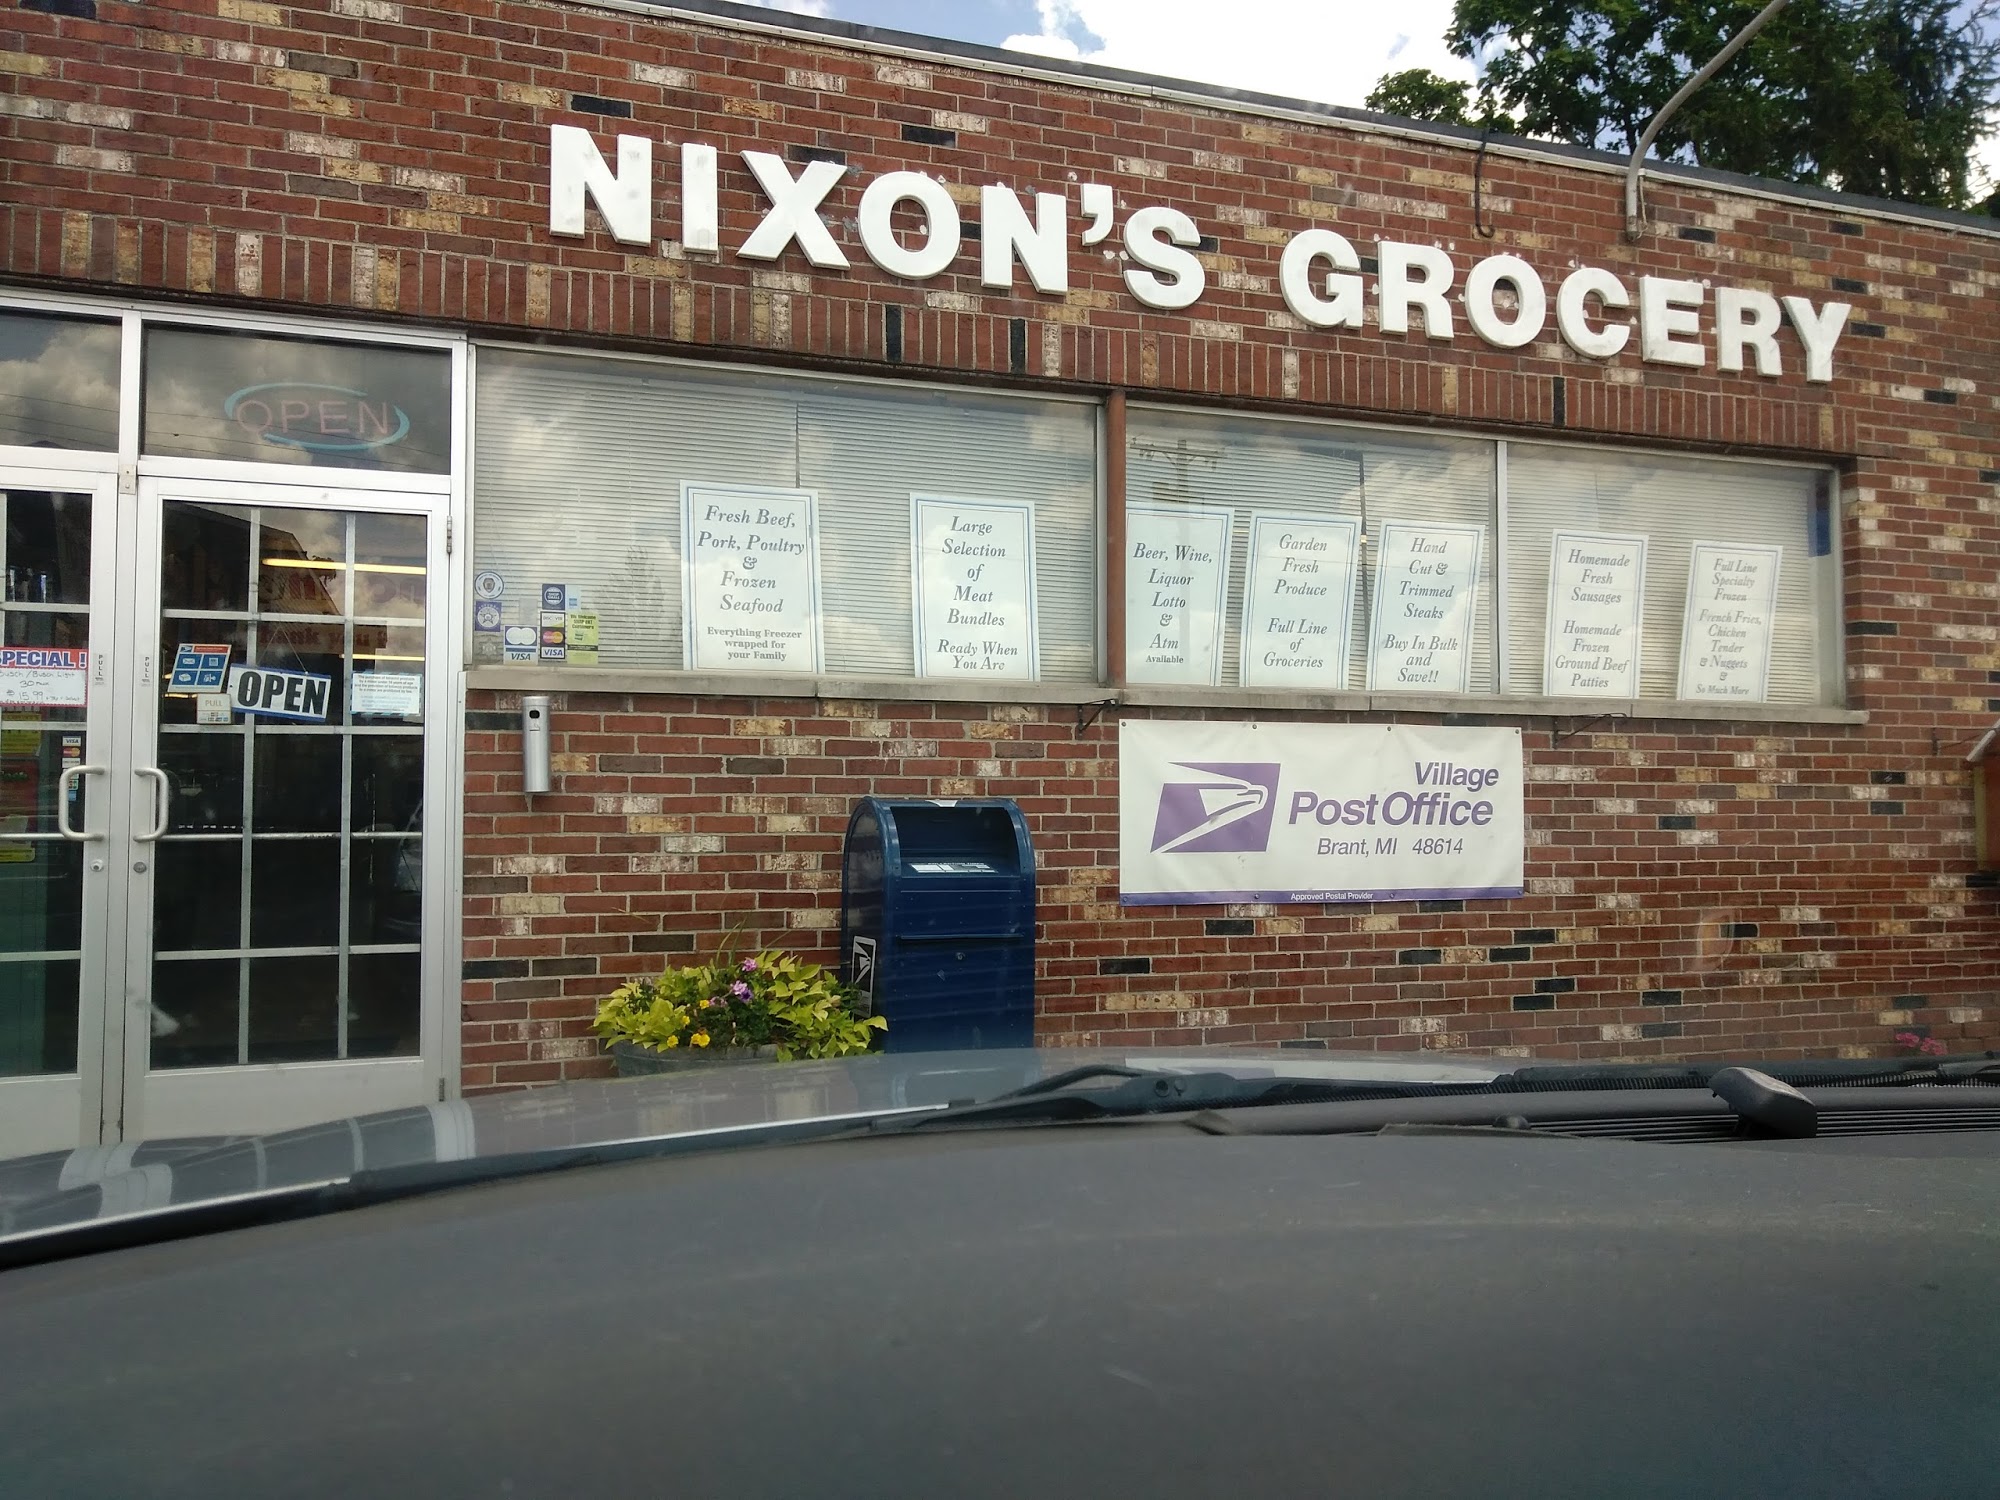 Nixon's Grocery